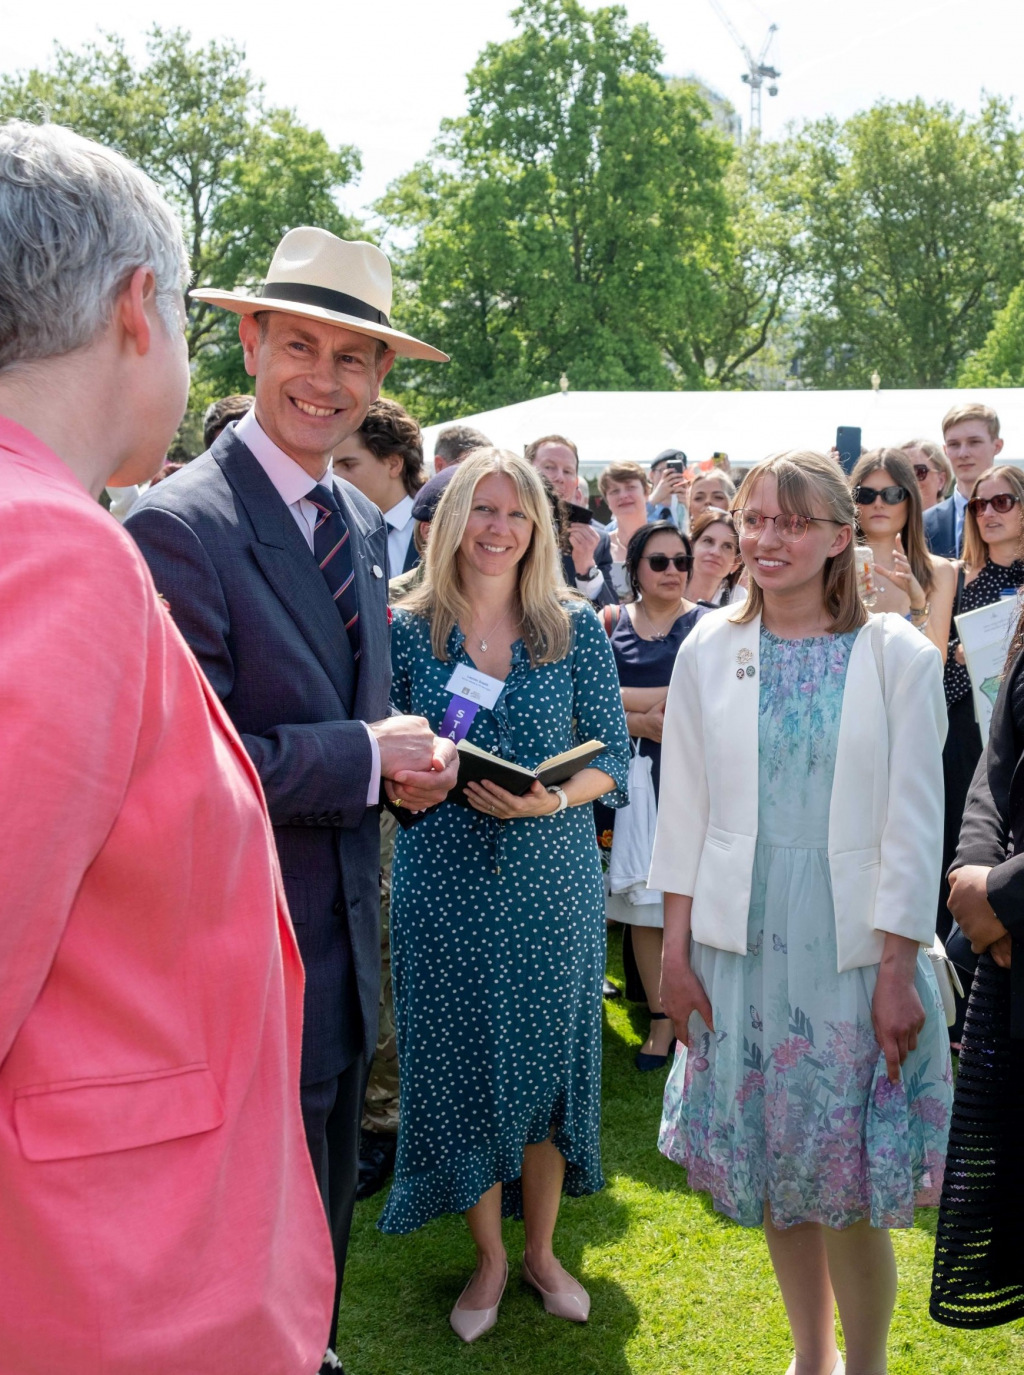 Two ladies in garden party dresses talk to Duke of Edinburgh